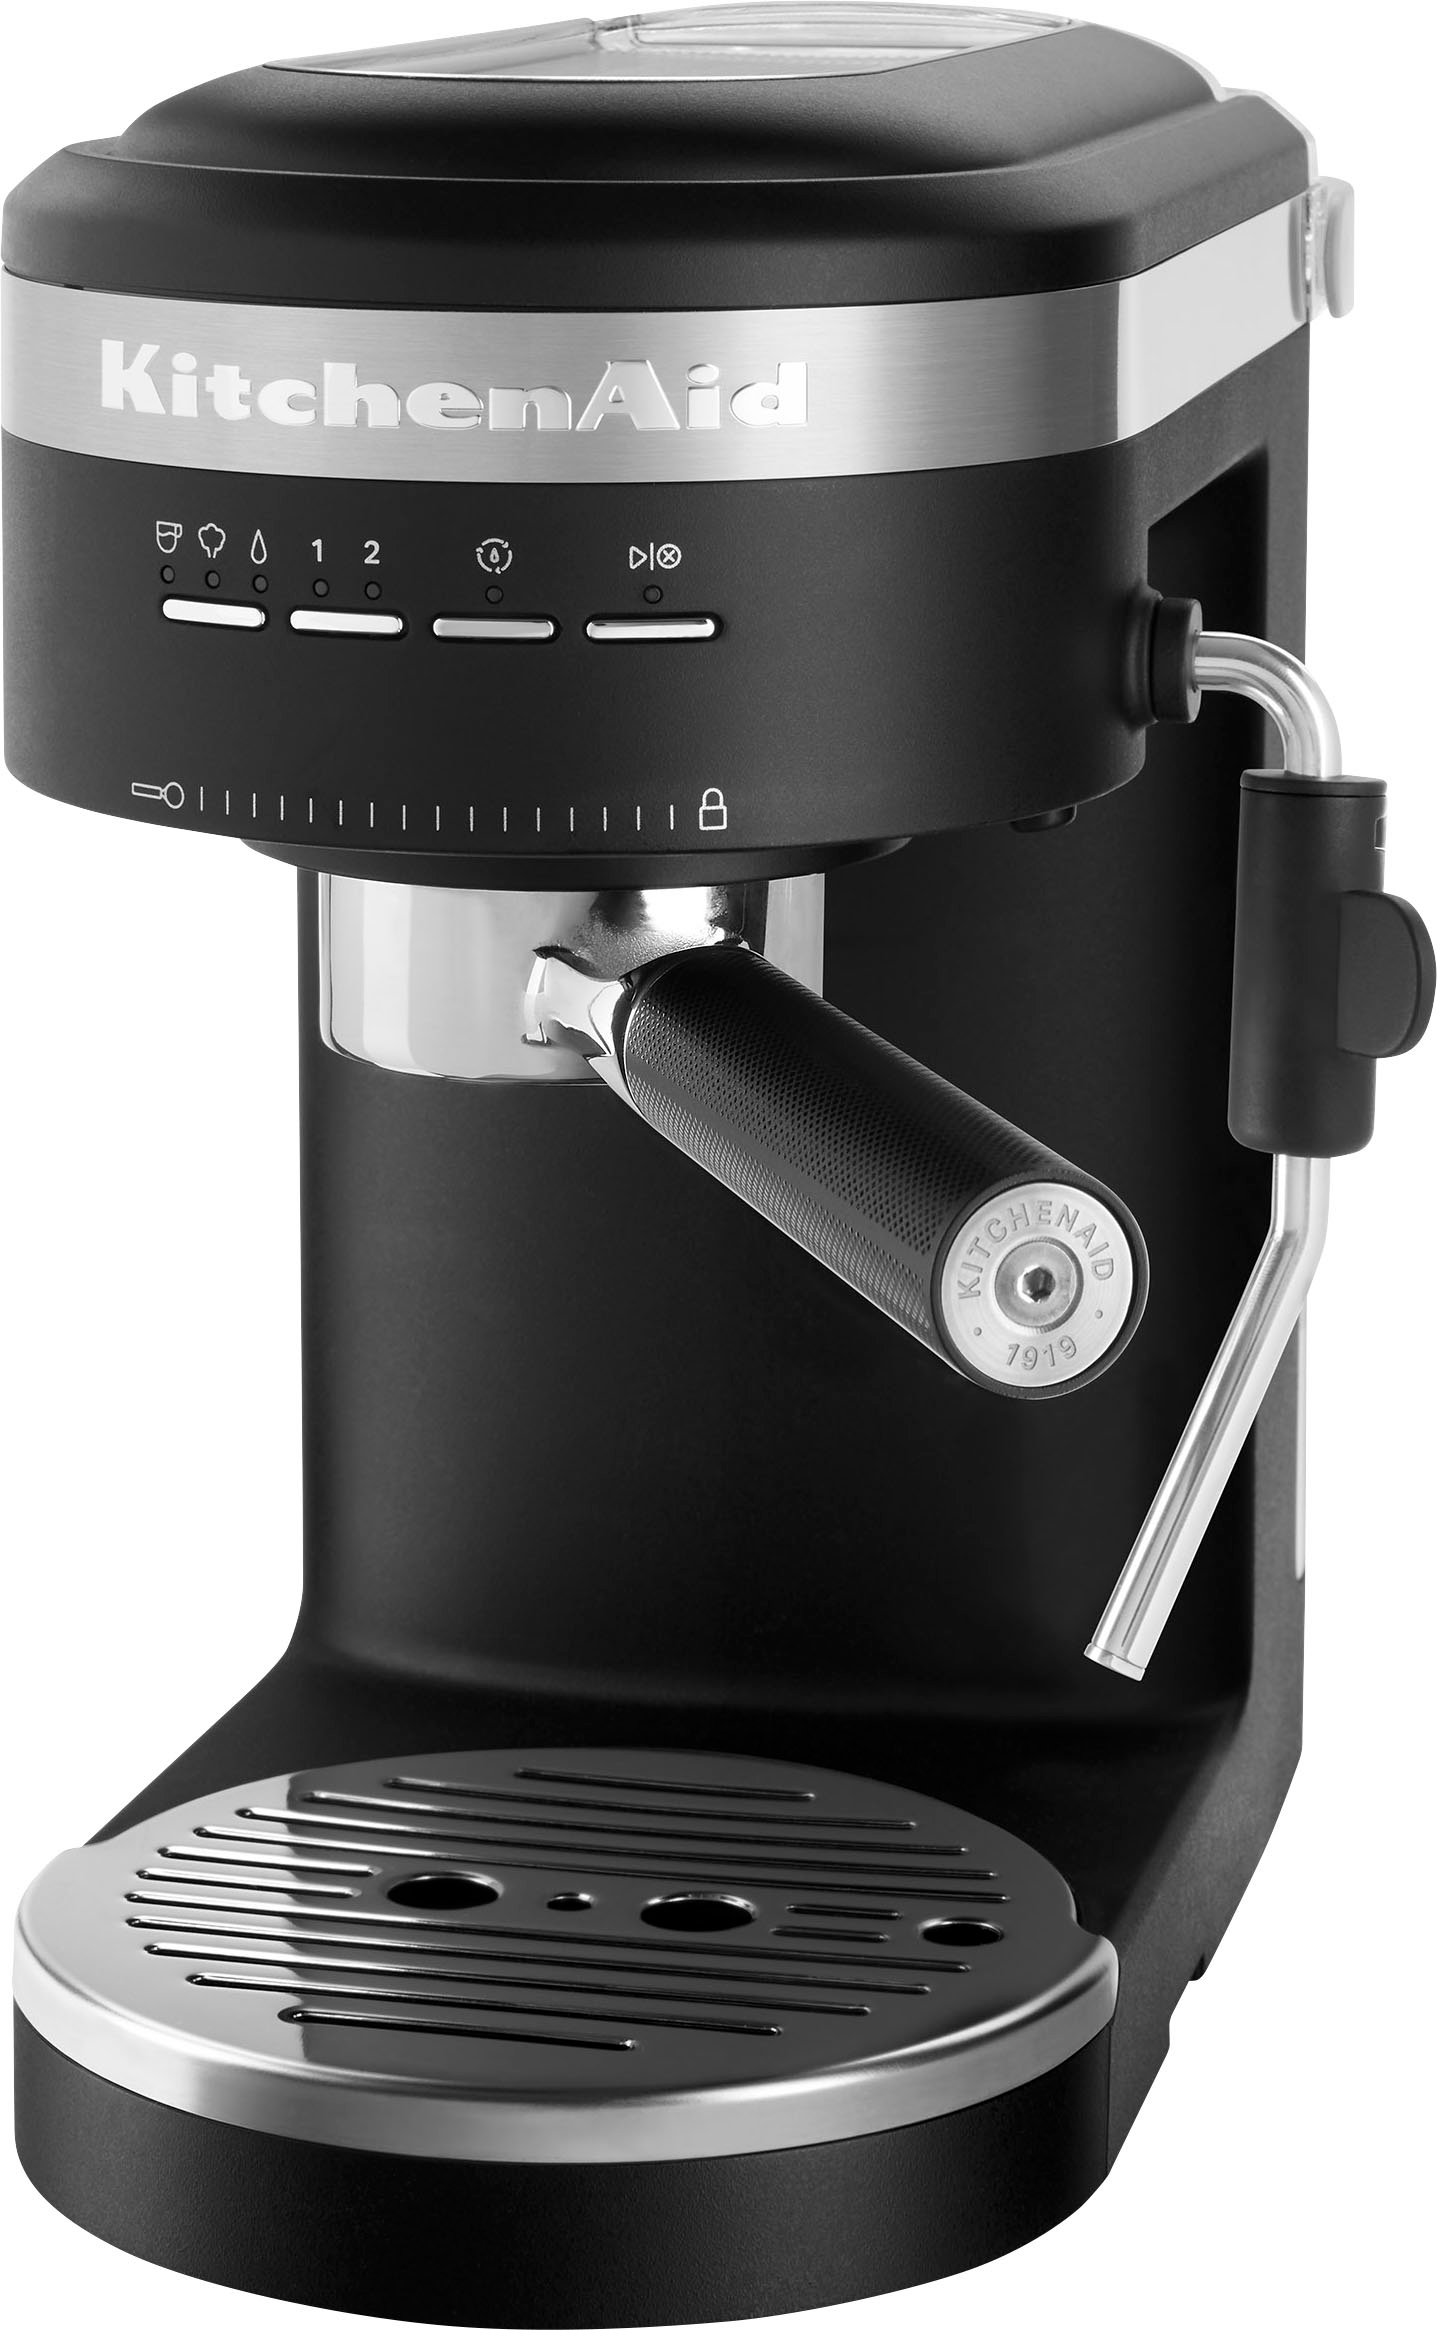 KitchenAid Coffee Maker - appliances - by owner - sale - craigslist